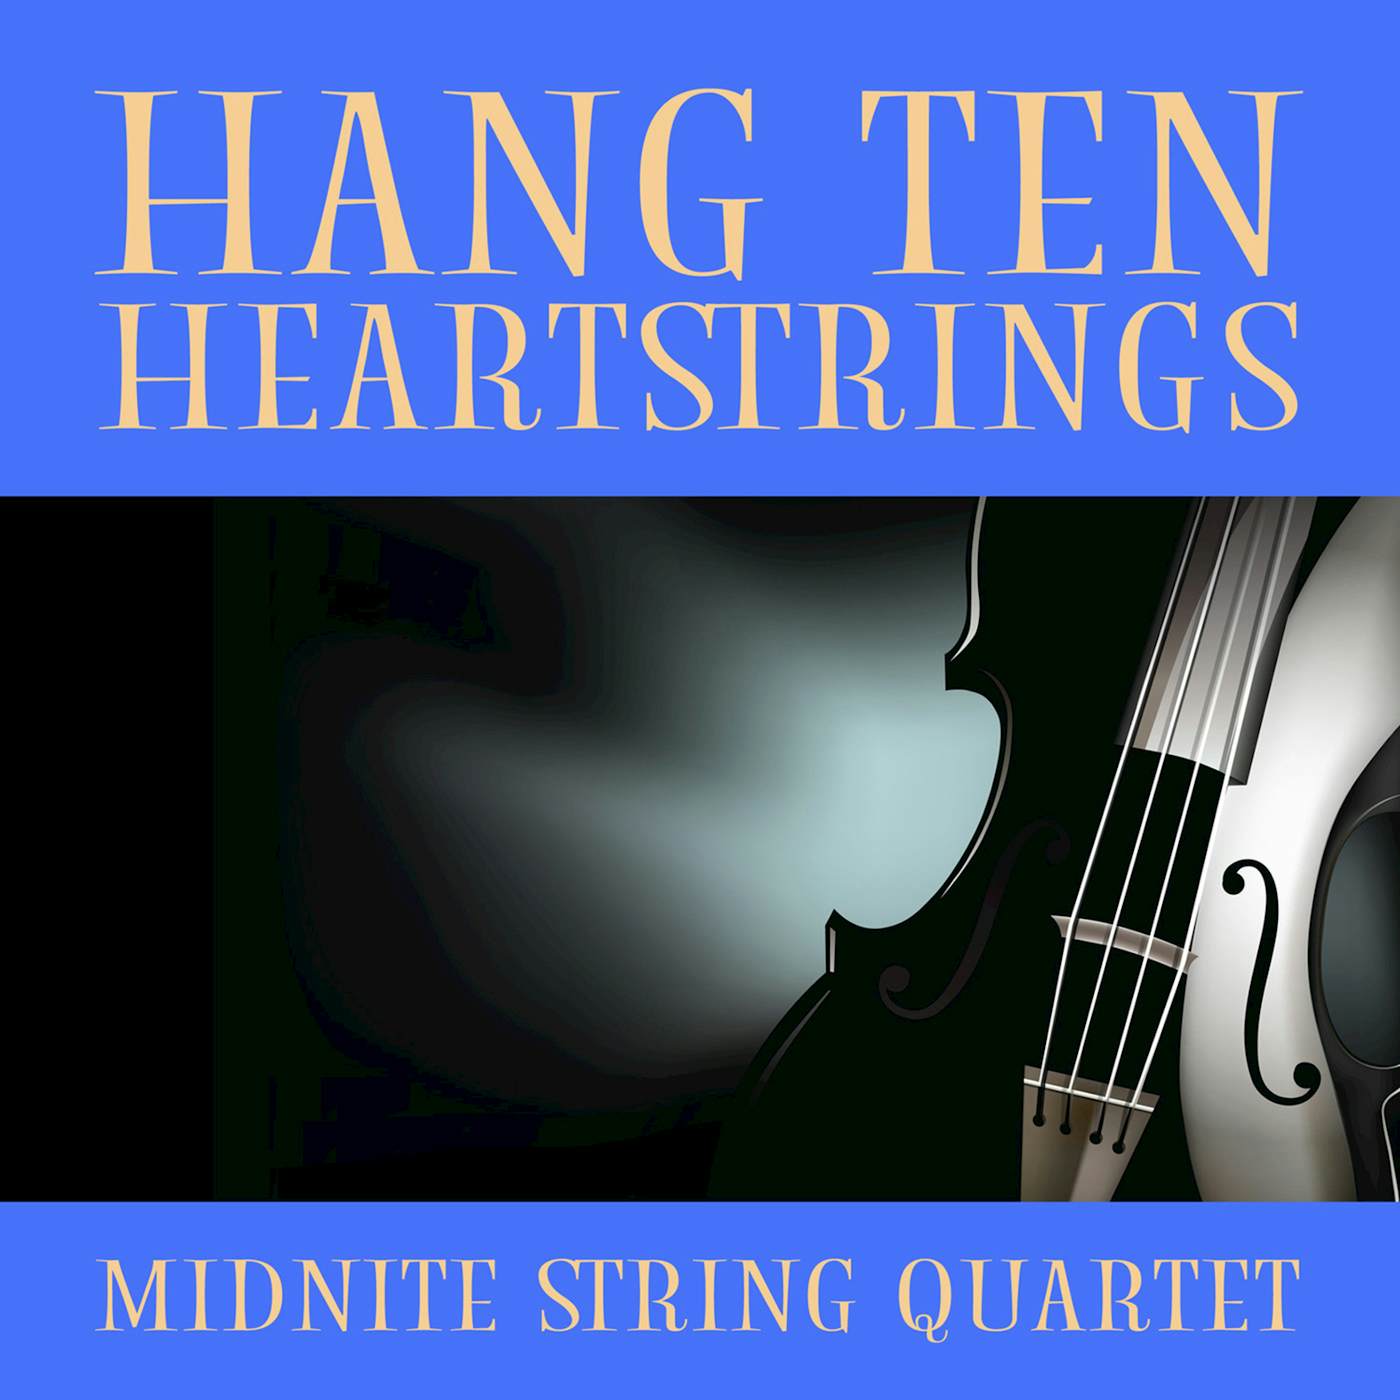 Midnite String Quartet HANG TEN HEARTSTRINGS (MOD) CD